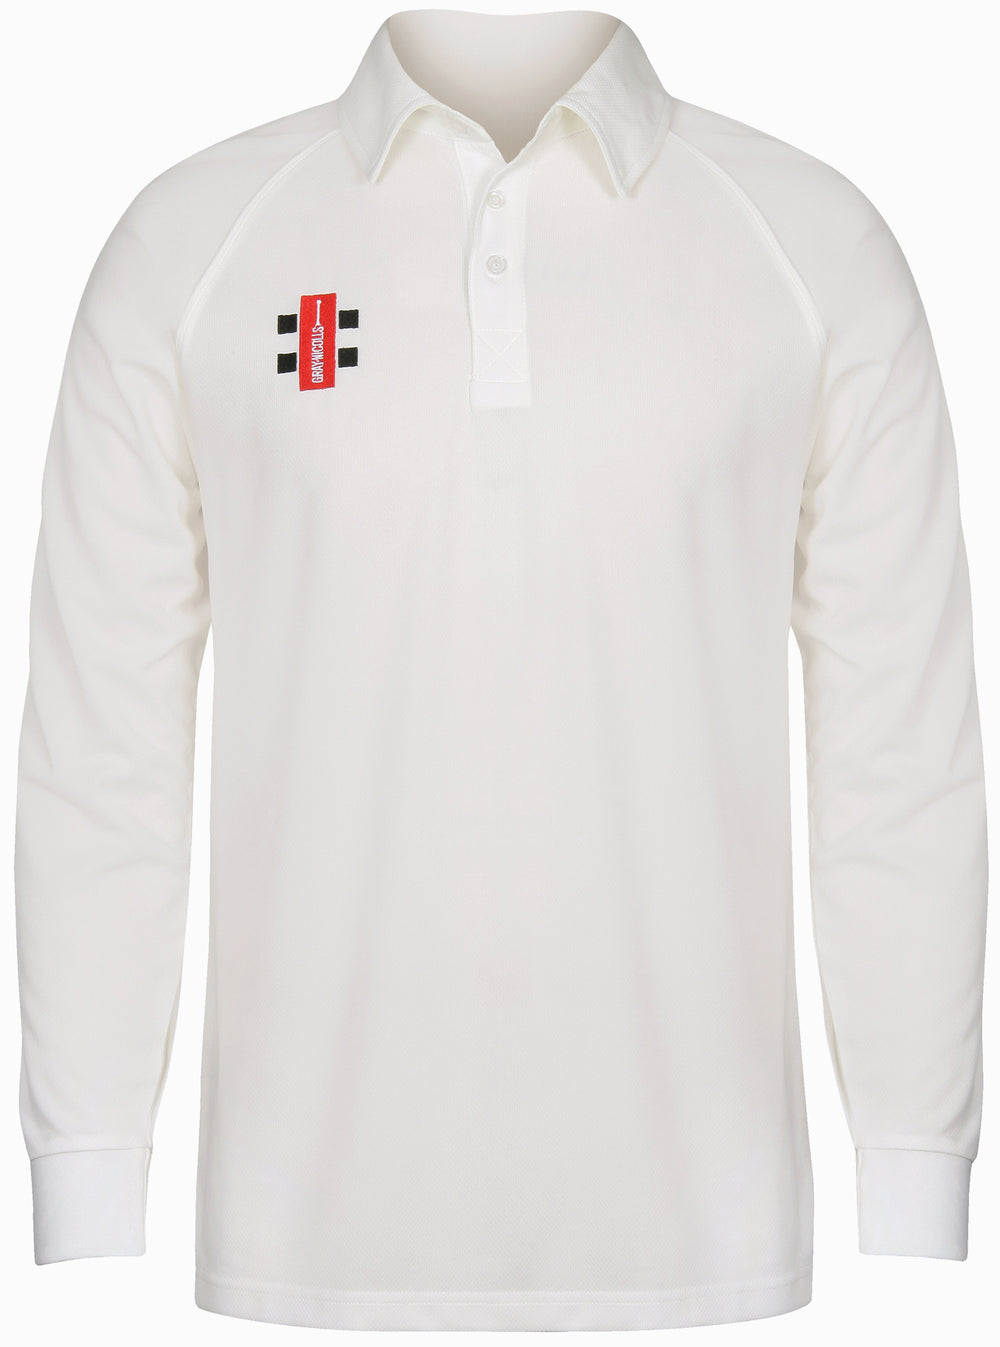 Westbury-on-Severn CC Matrix L/S Match Shirt